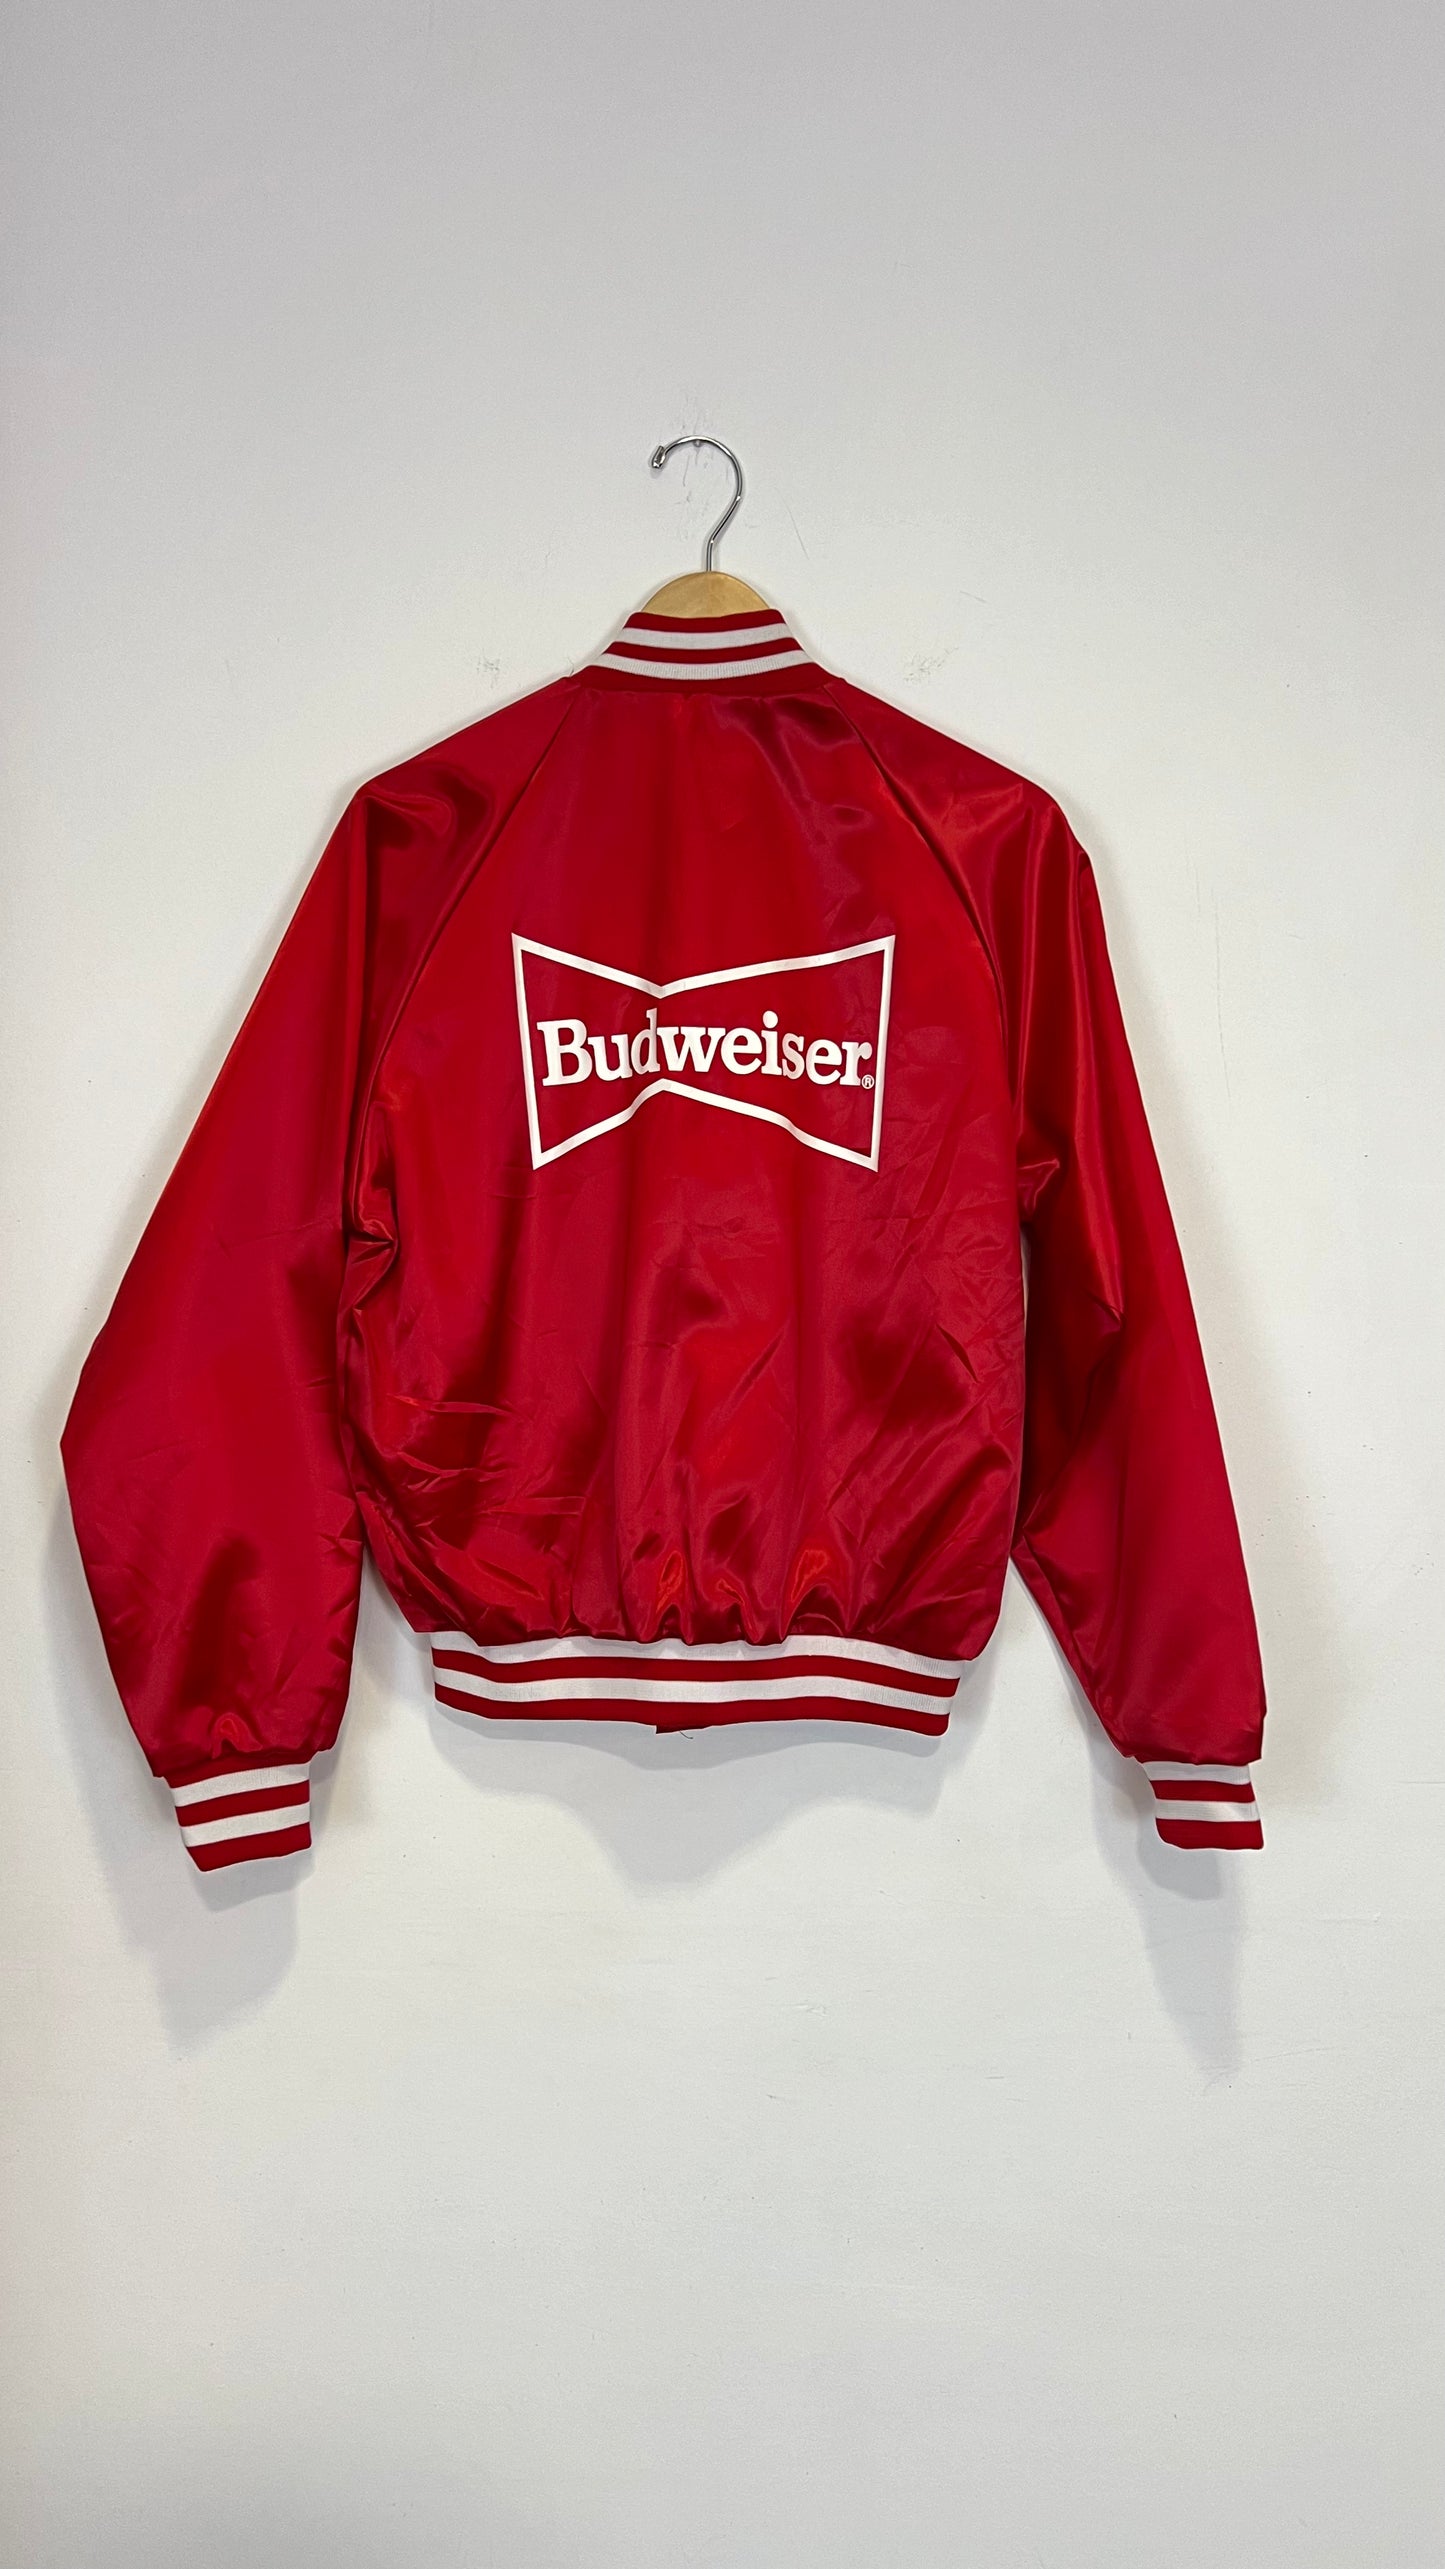 Budweiser Red Bomber Jacket